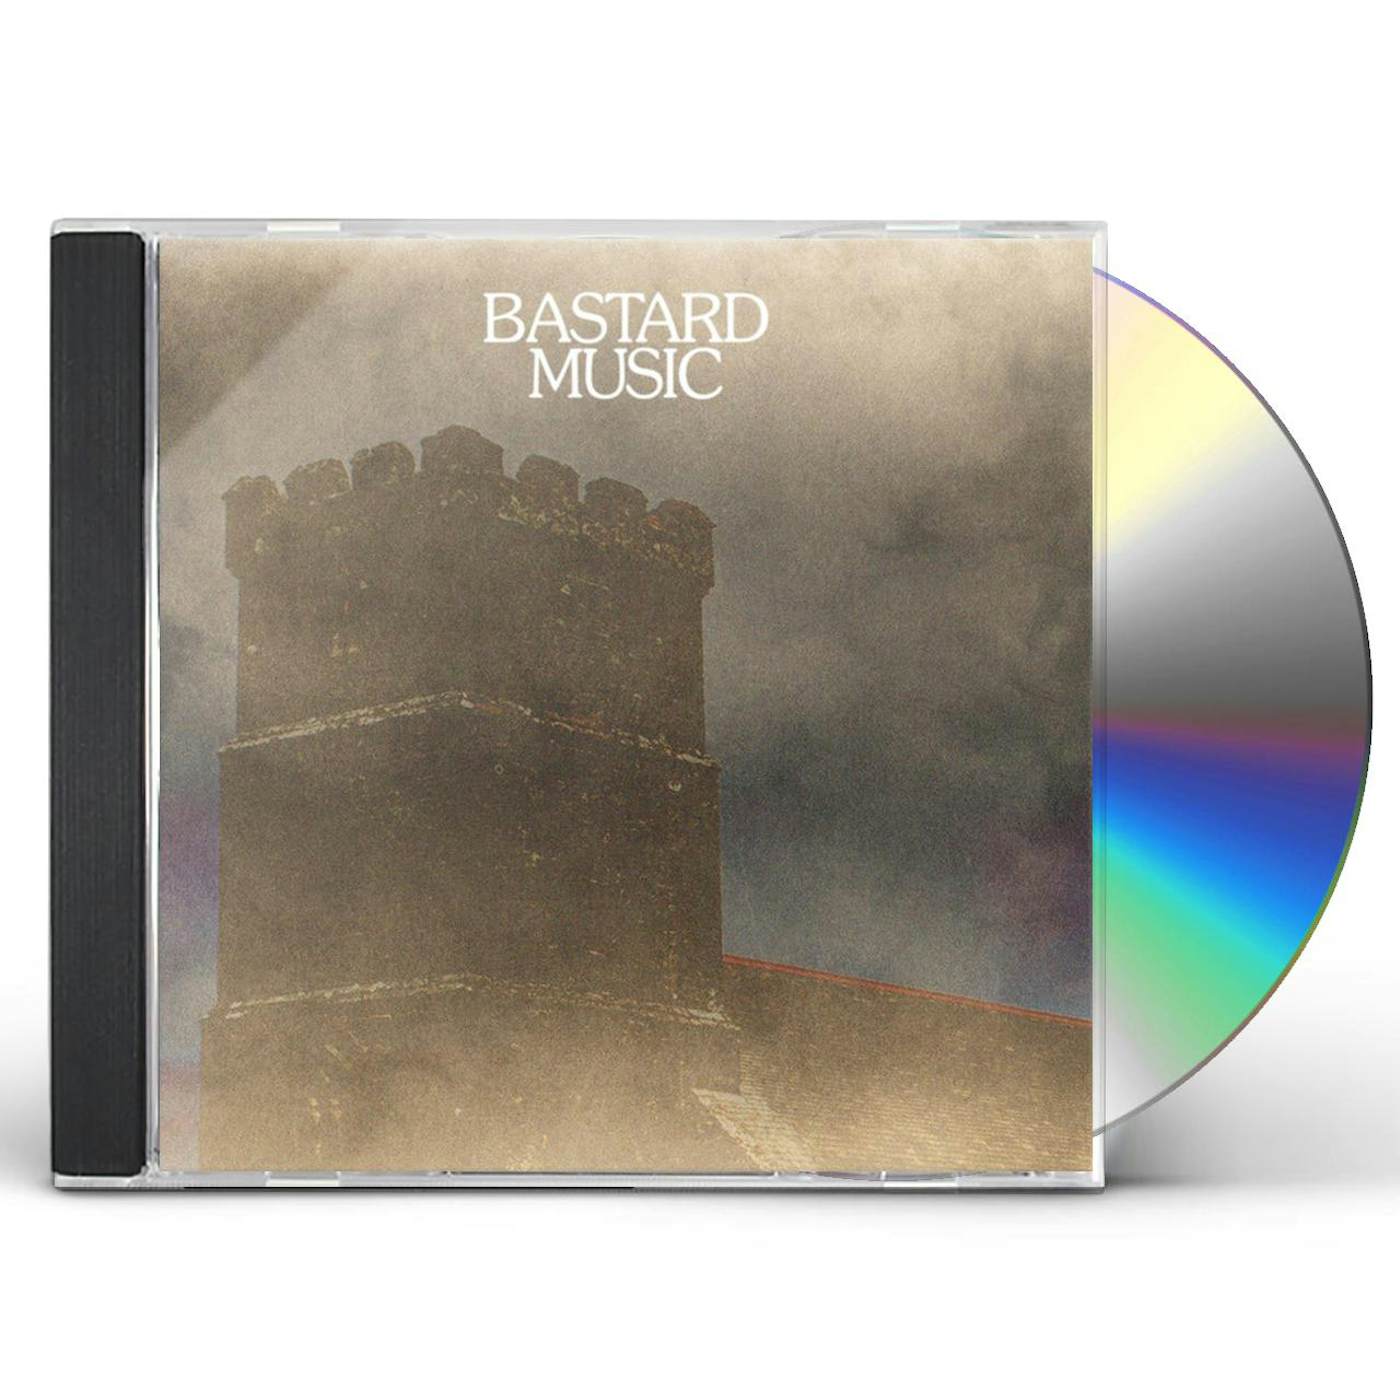 Meatraffle BASTARD MUSIC CD